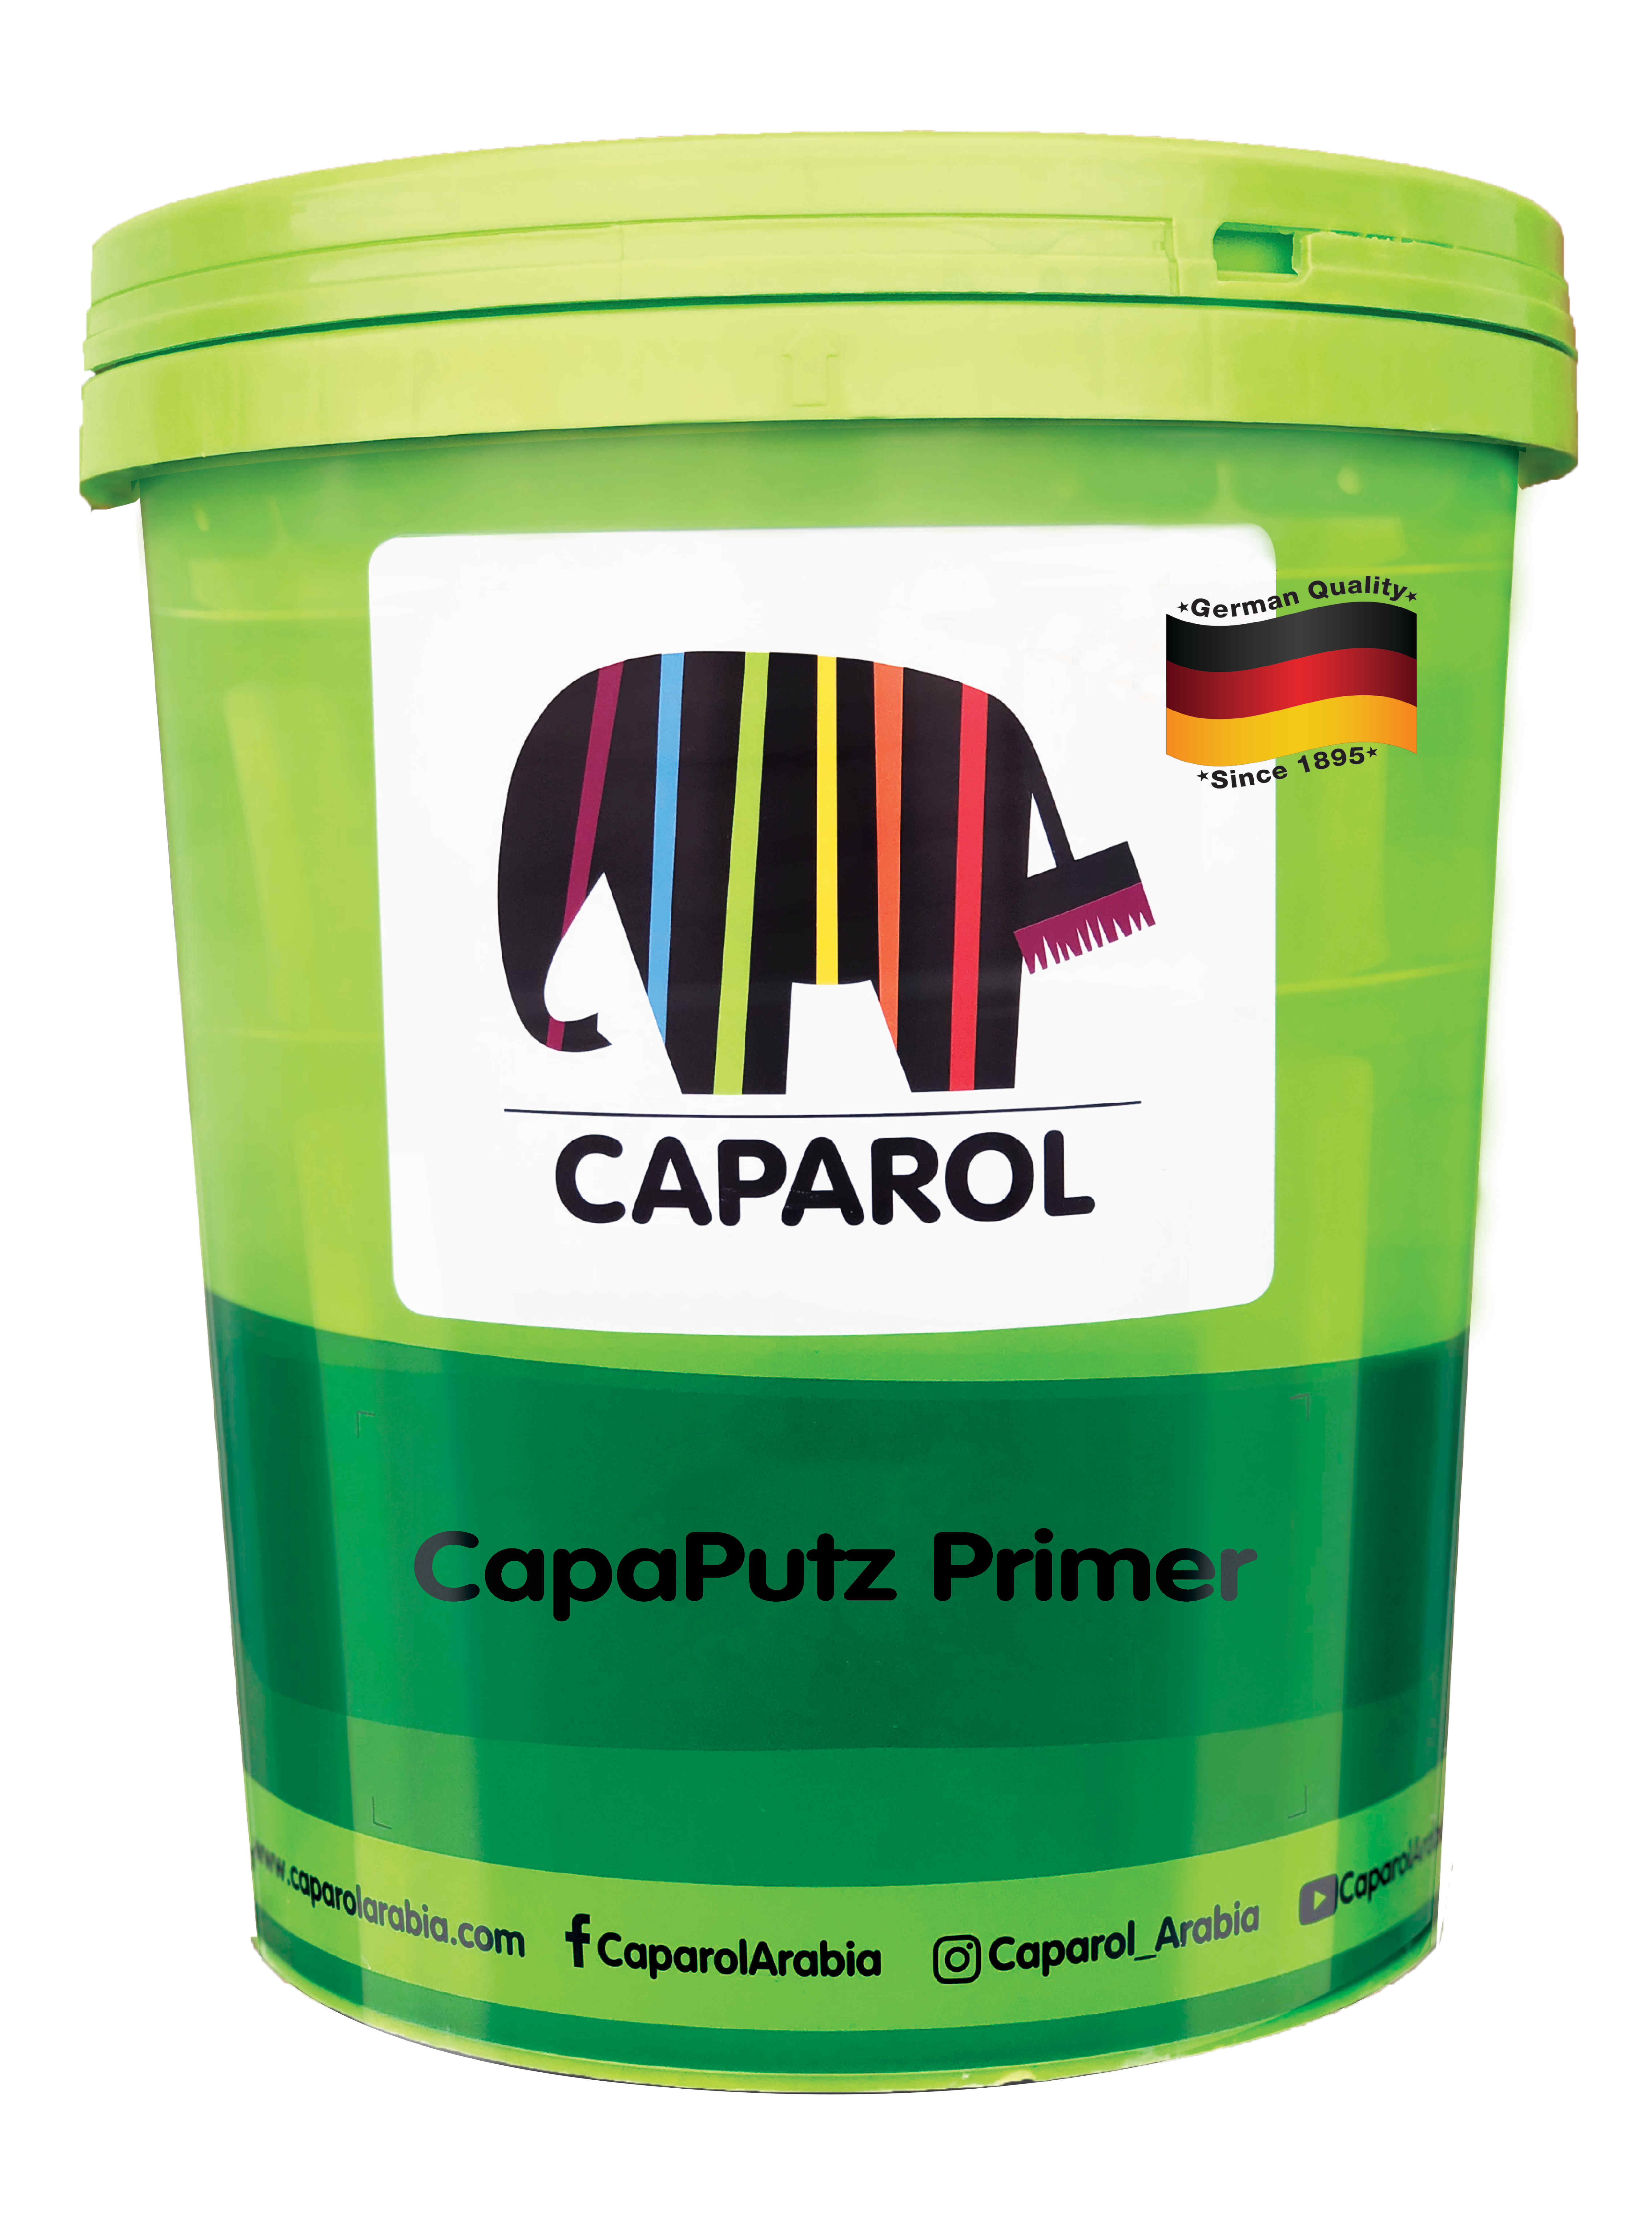 CapaPutz Primer - Acrylic primer with added quartz sand for EXTERIOR & INTERIOR for textures